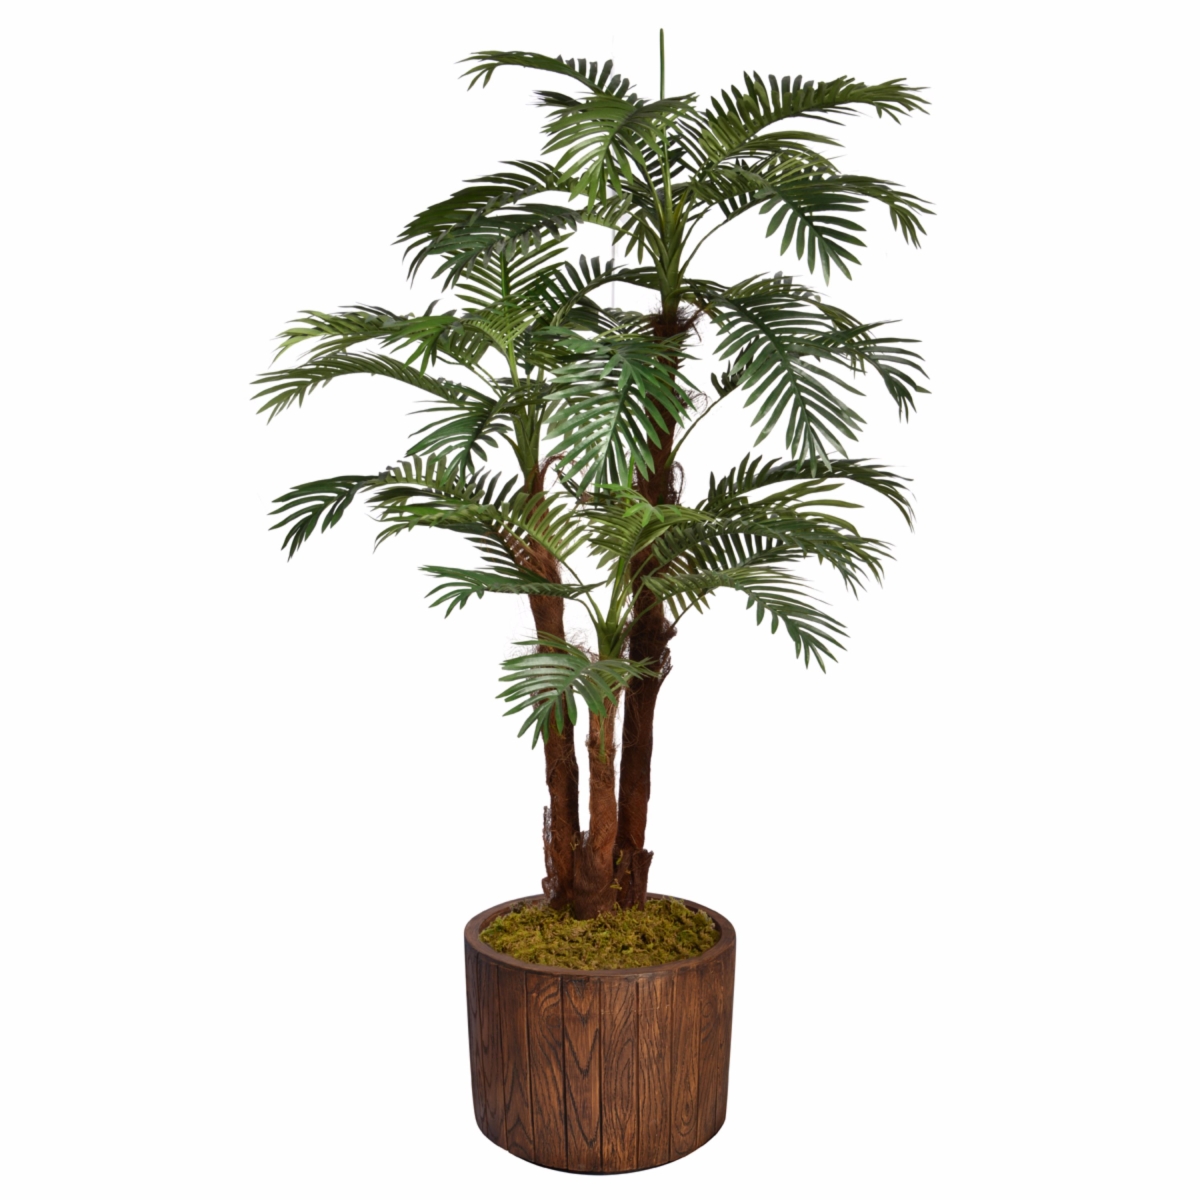 Vhx135202 70.8 In. Tall Palm Tree With Burlap Kit & Fiberstone Planter